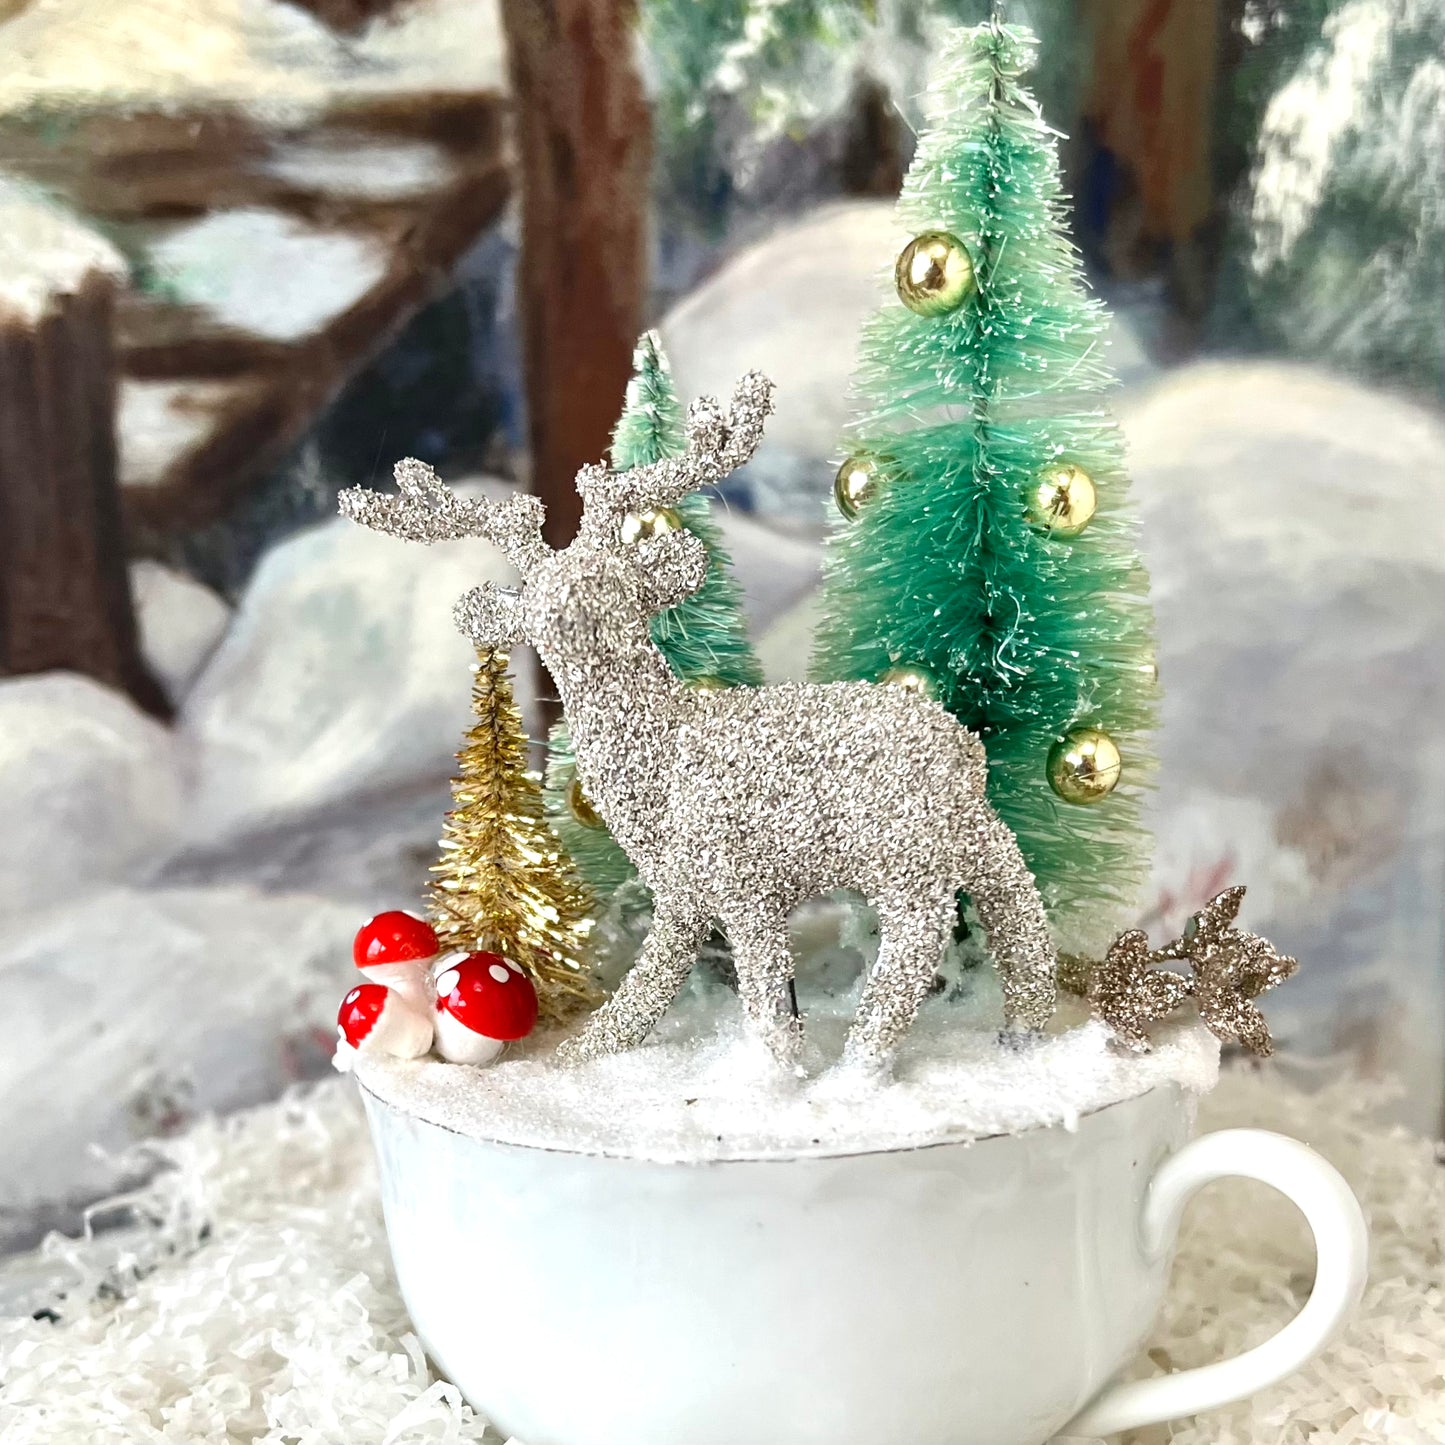 Glittered Deer in a Teacup Scene - Kit